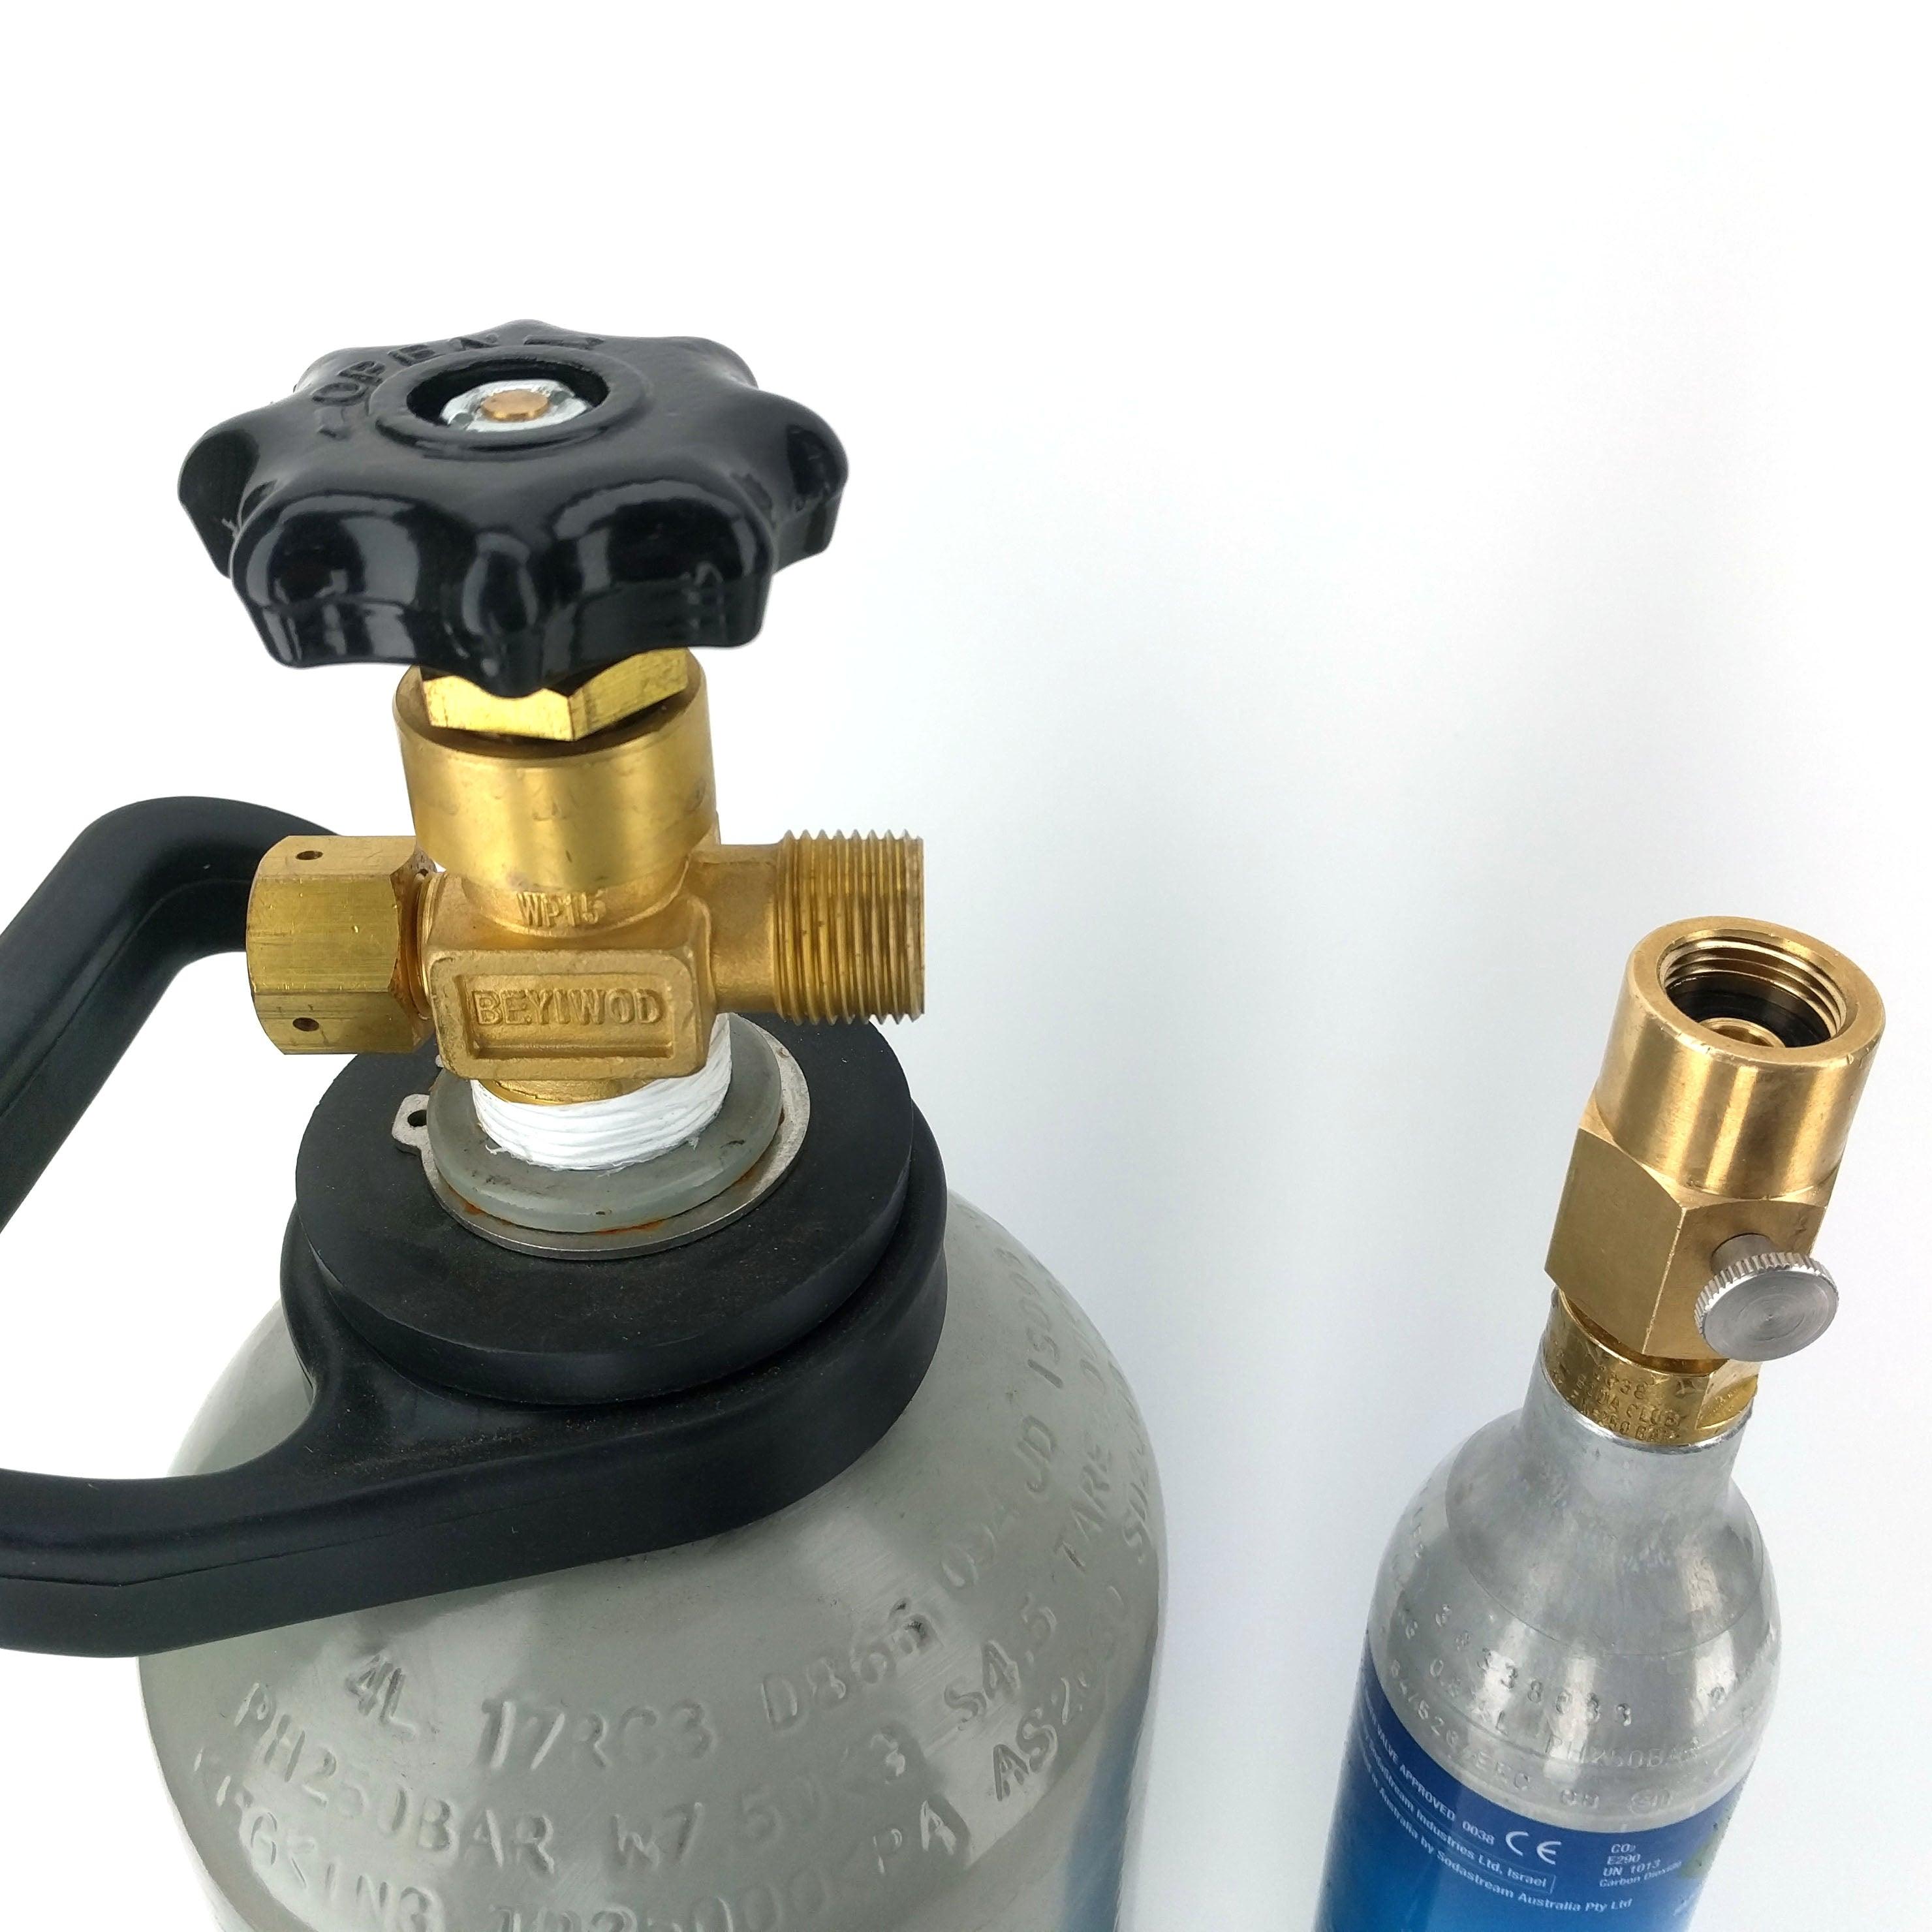 Sodastream Cylinder Filling Adapter (filling station)